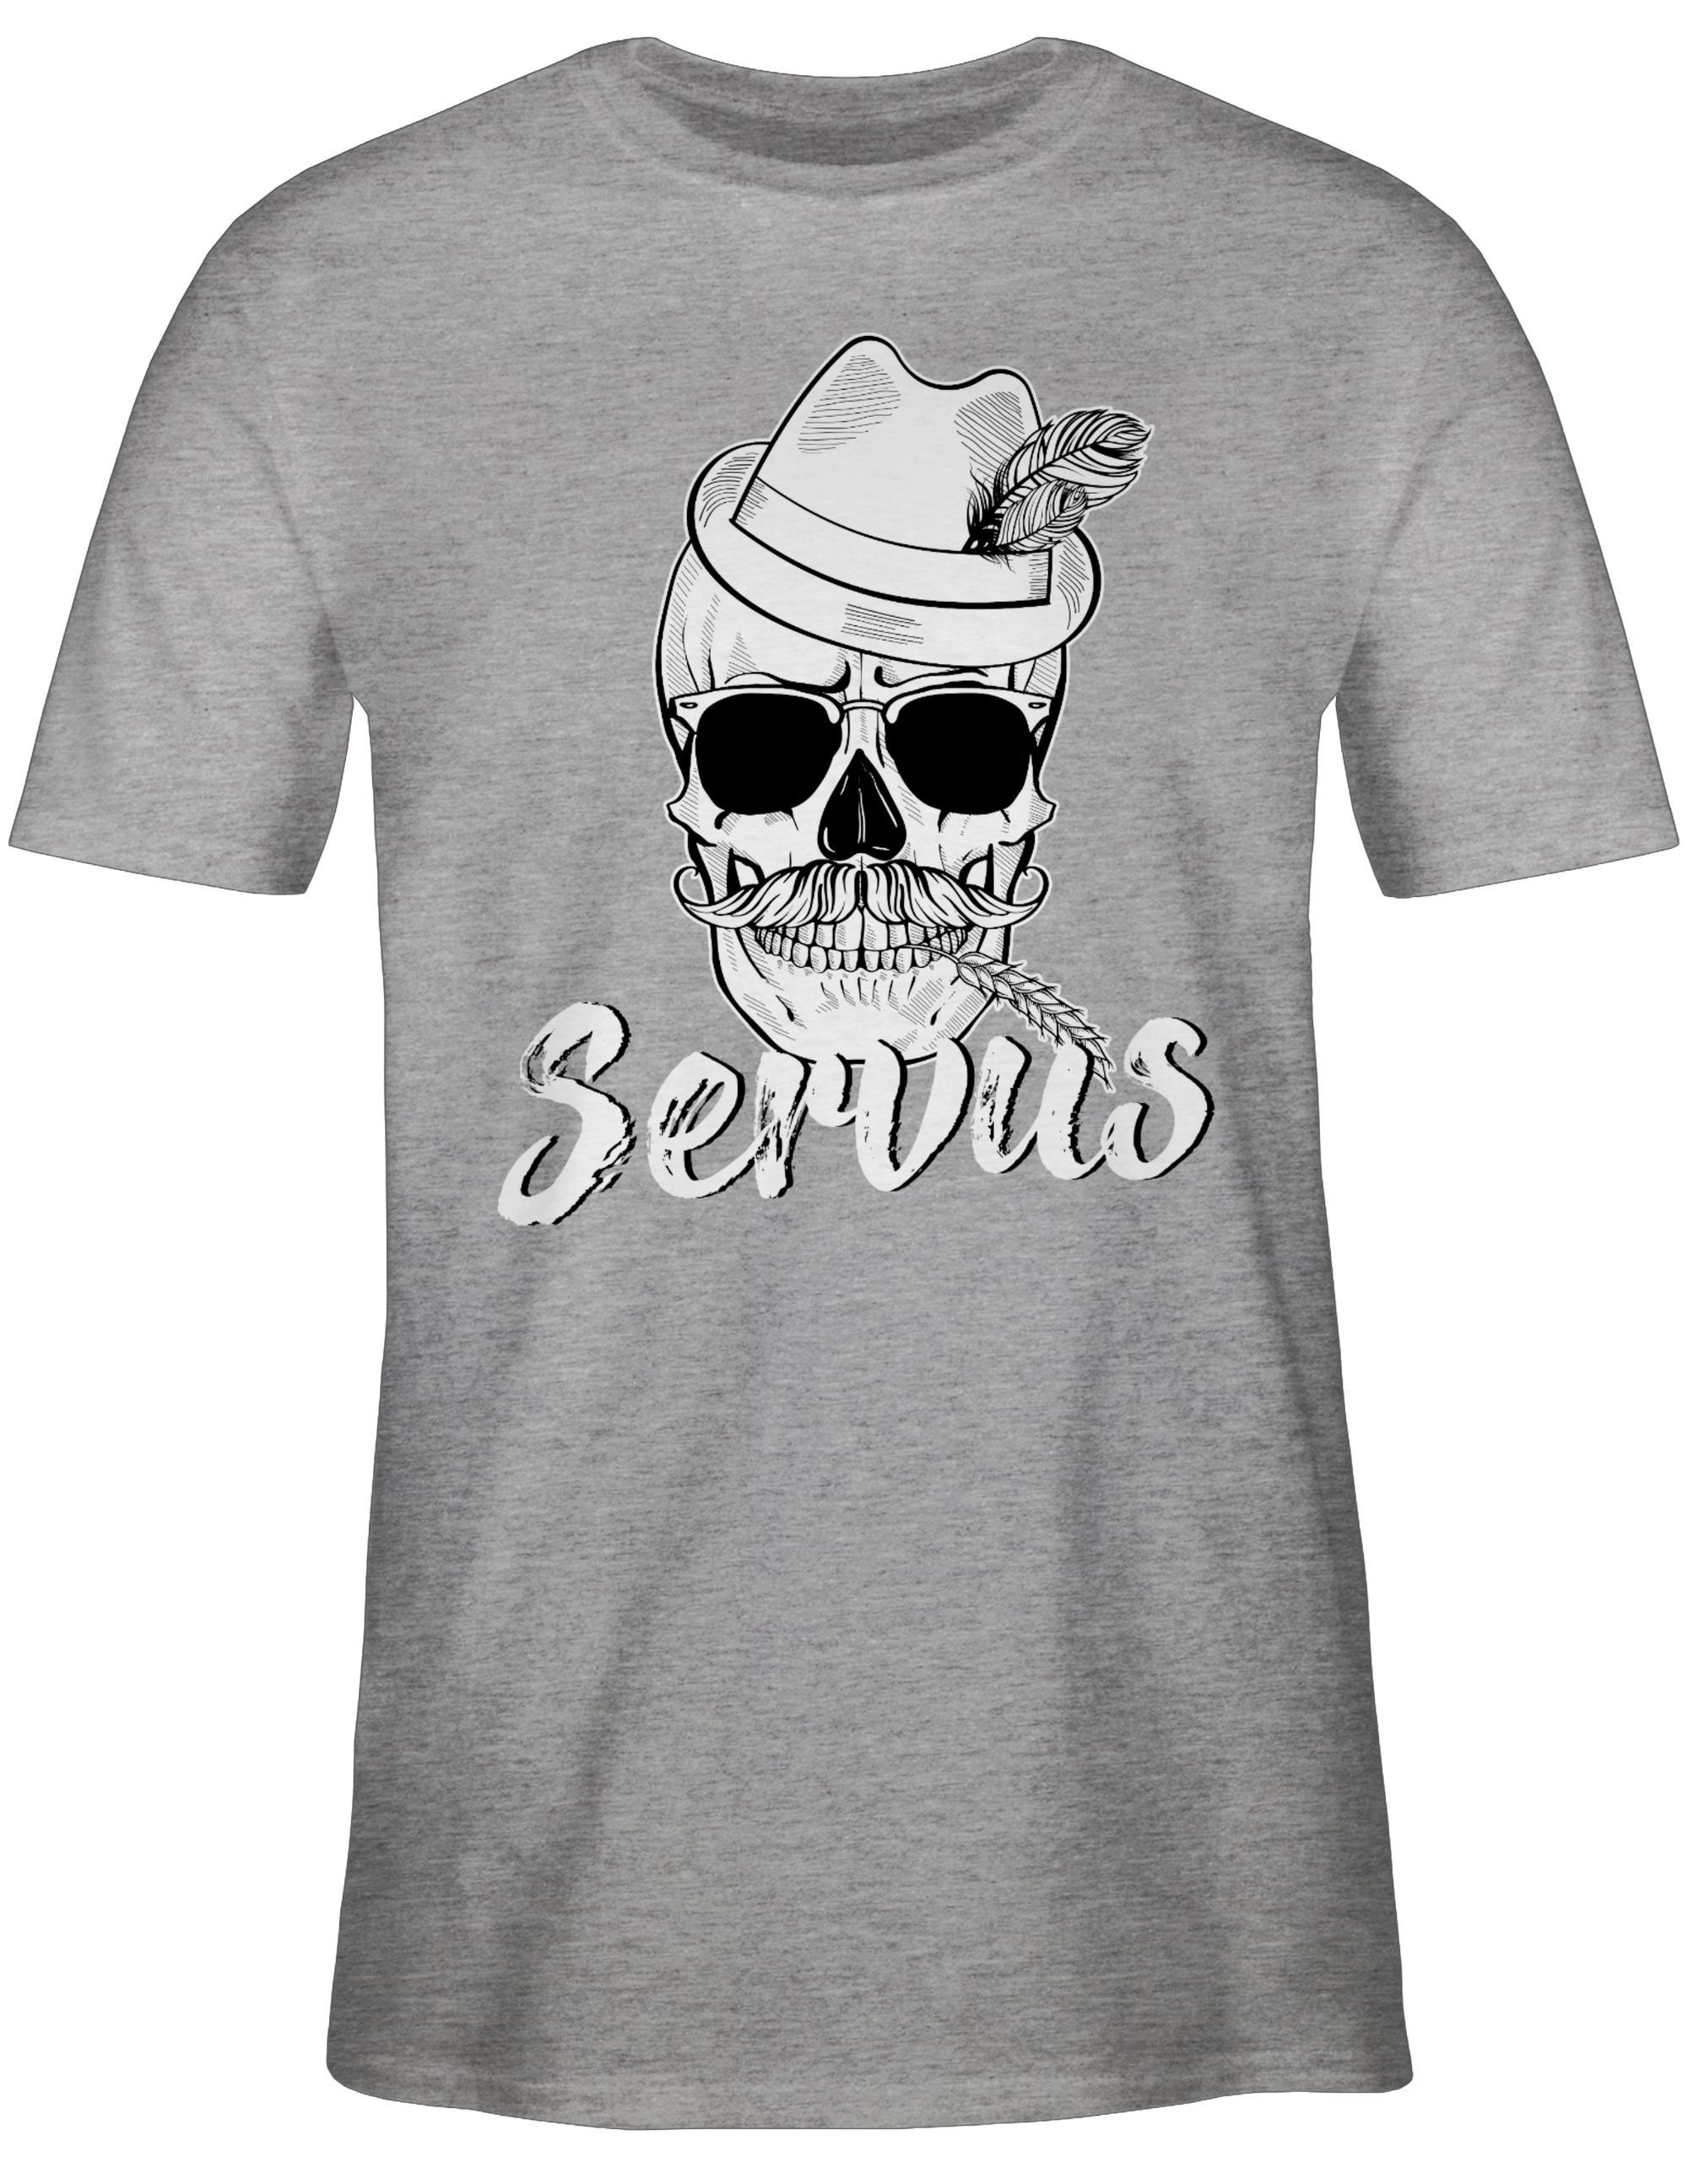 Herren Servus Bayern Totenkopf T-Shirt für Oktoberfest Shirtracer Mode 03 Grau meliert